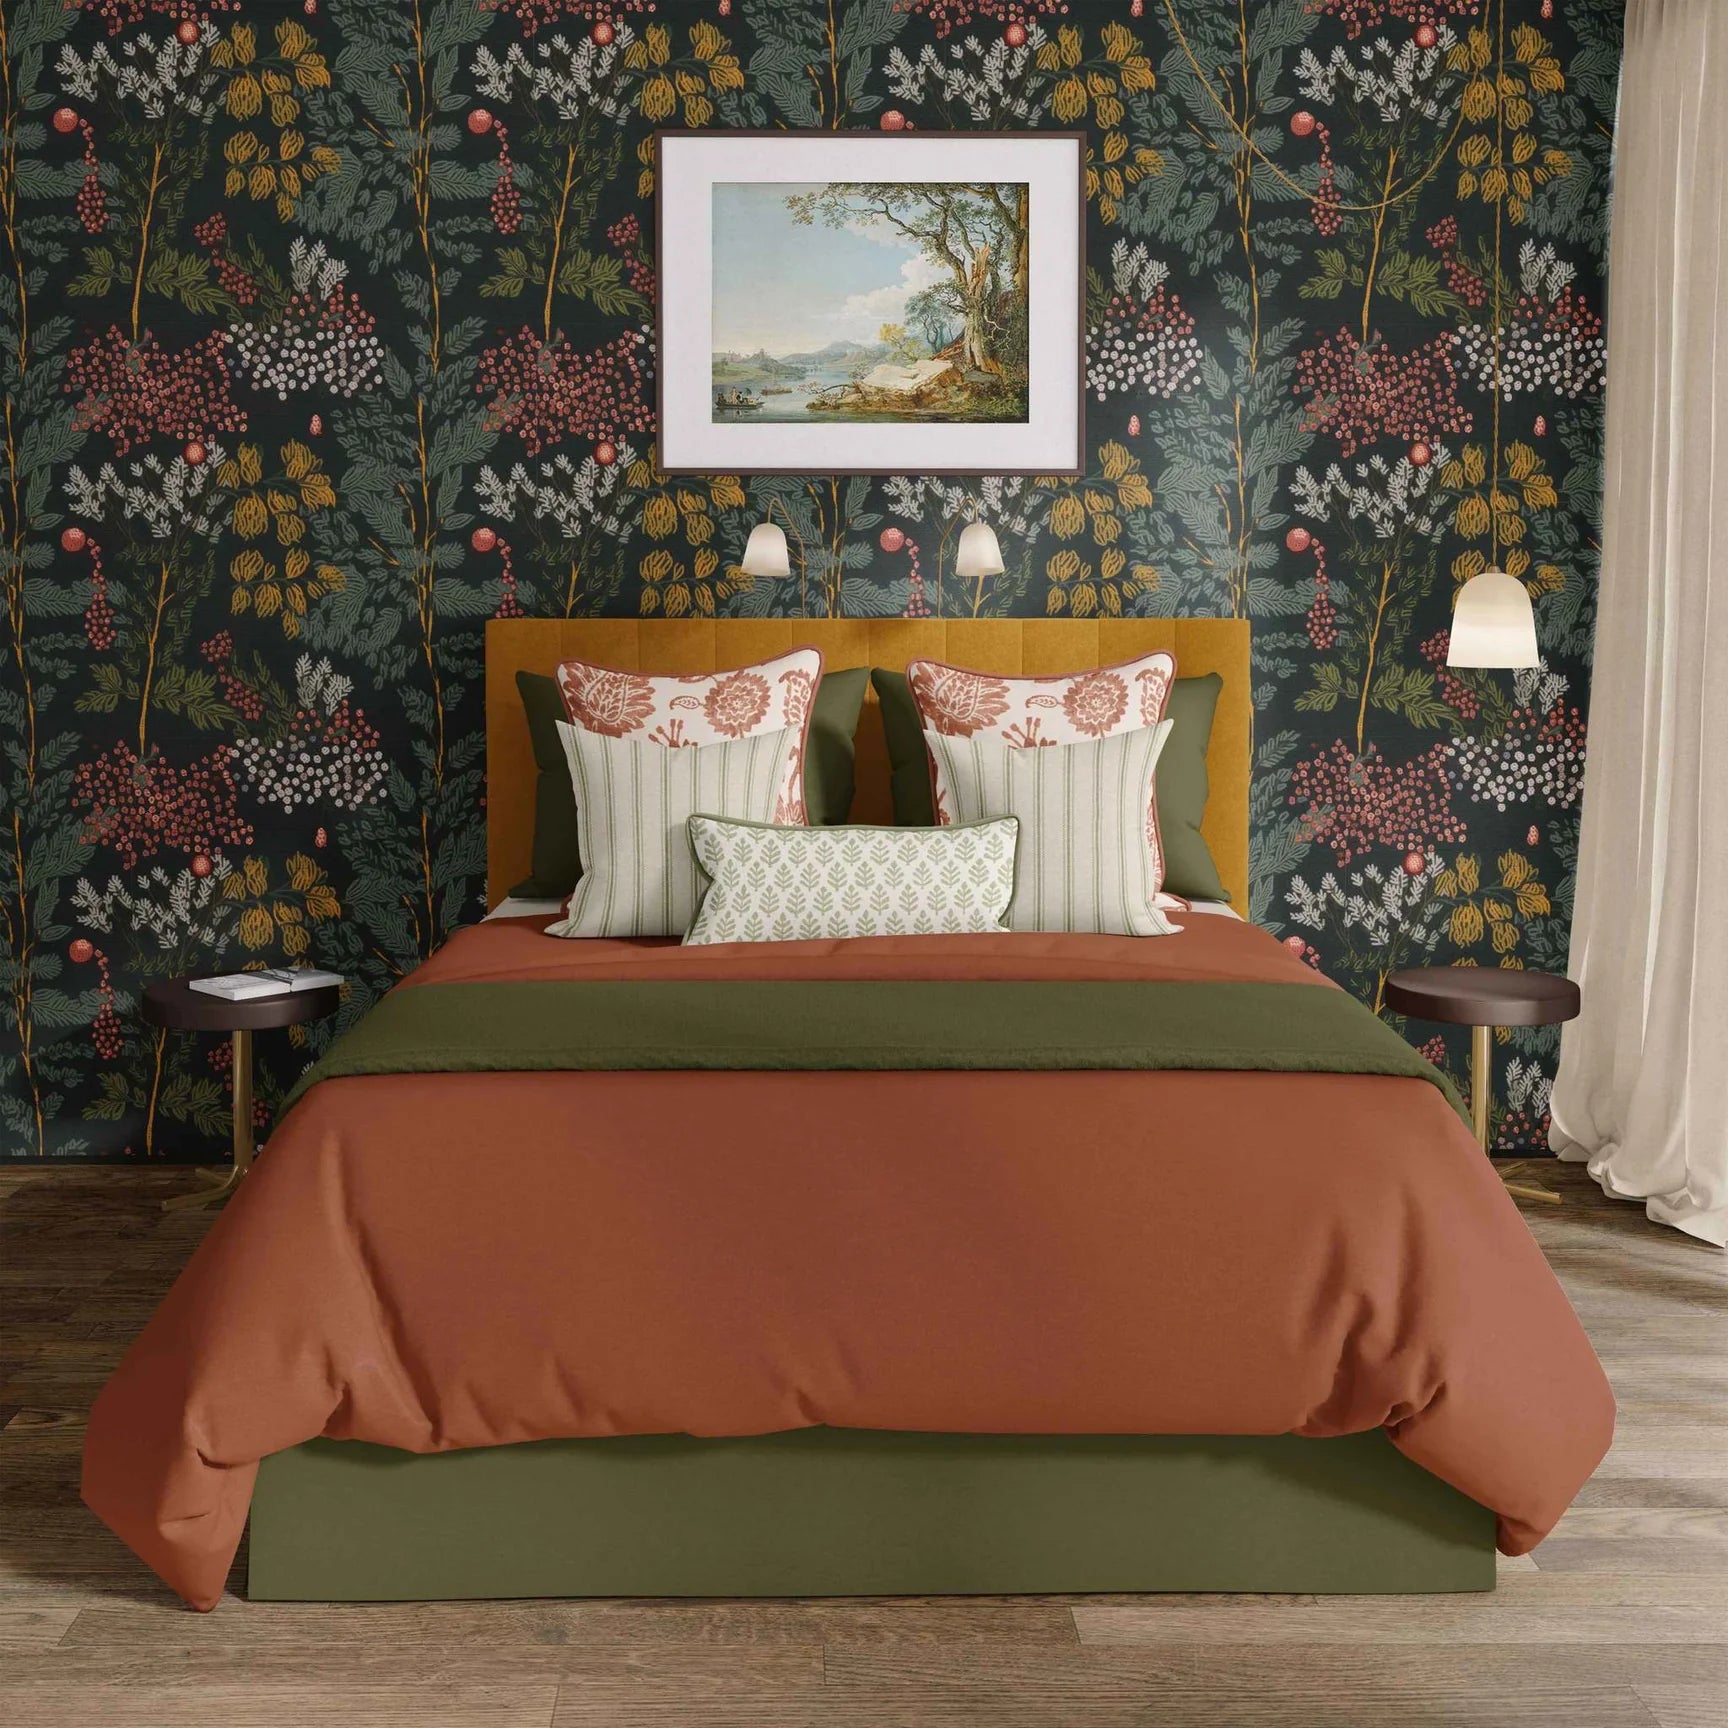 A cosy bedroom with dark floral wallpaper